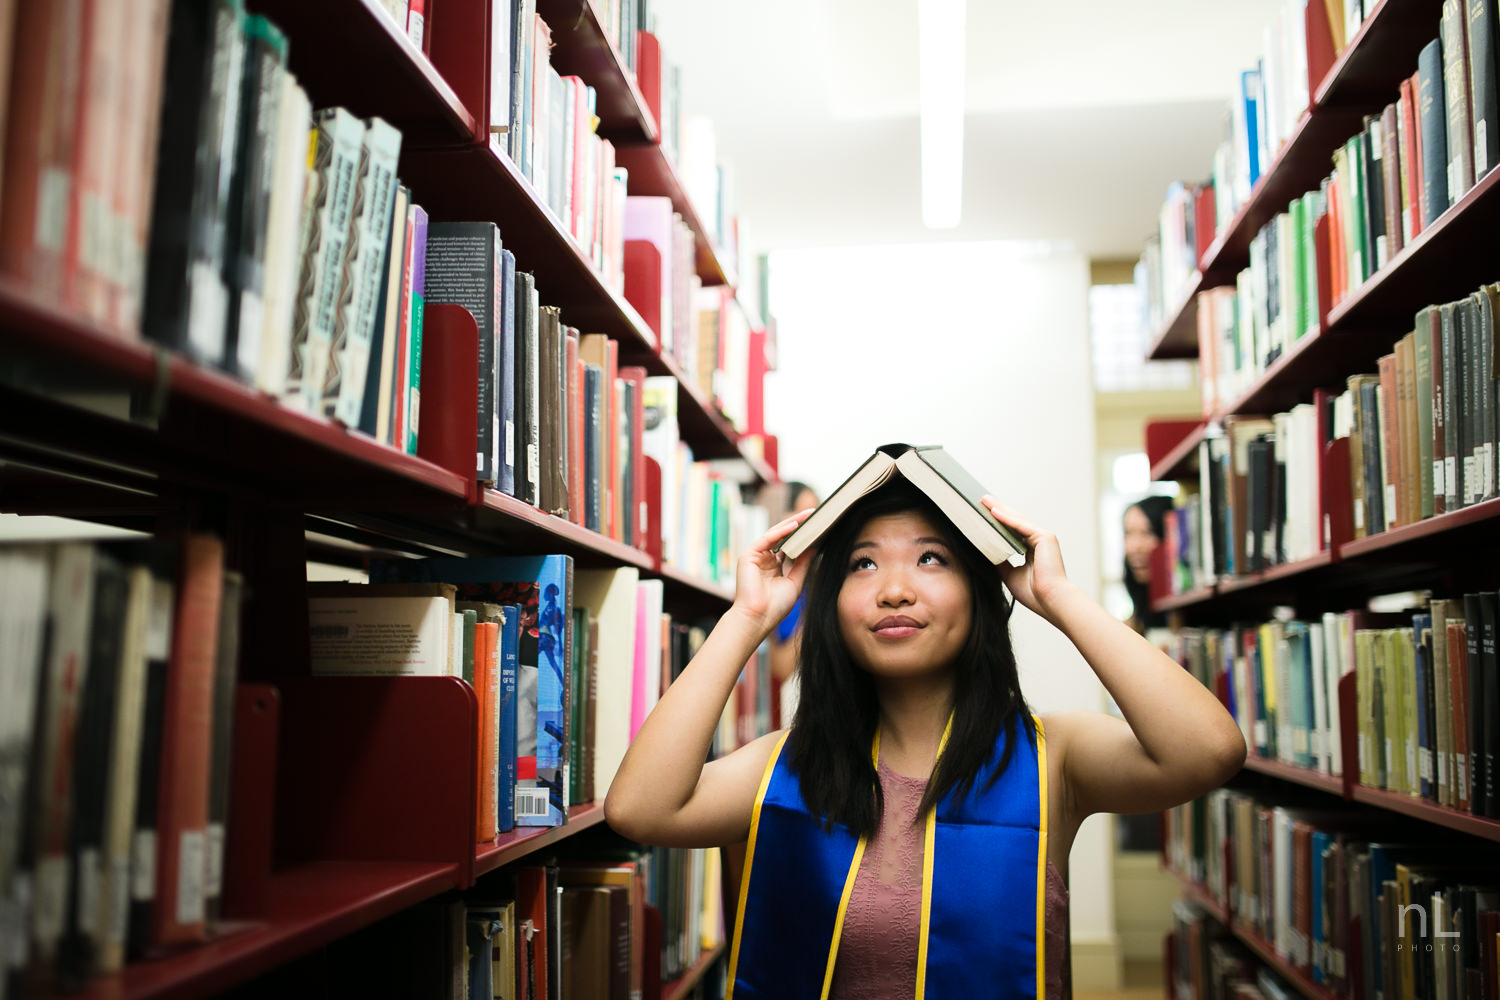 UCLA graduation portraits inside Powell Library with books